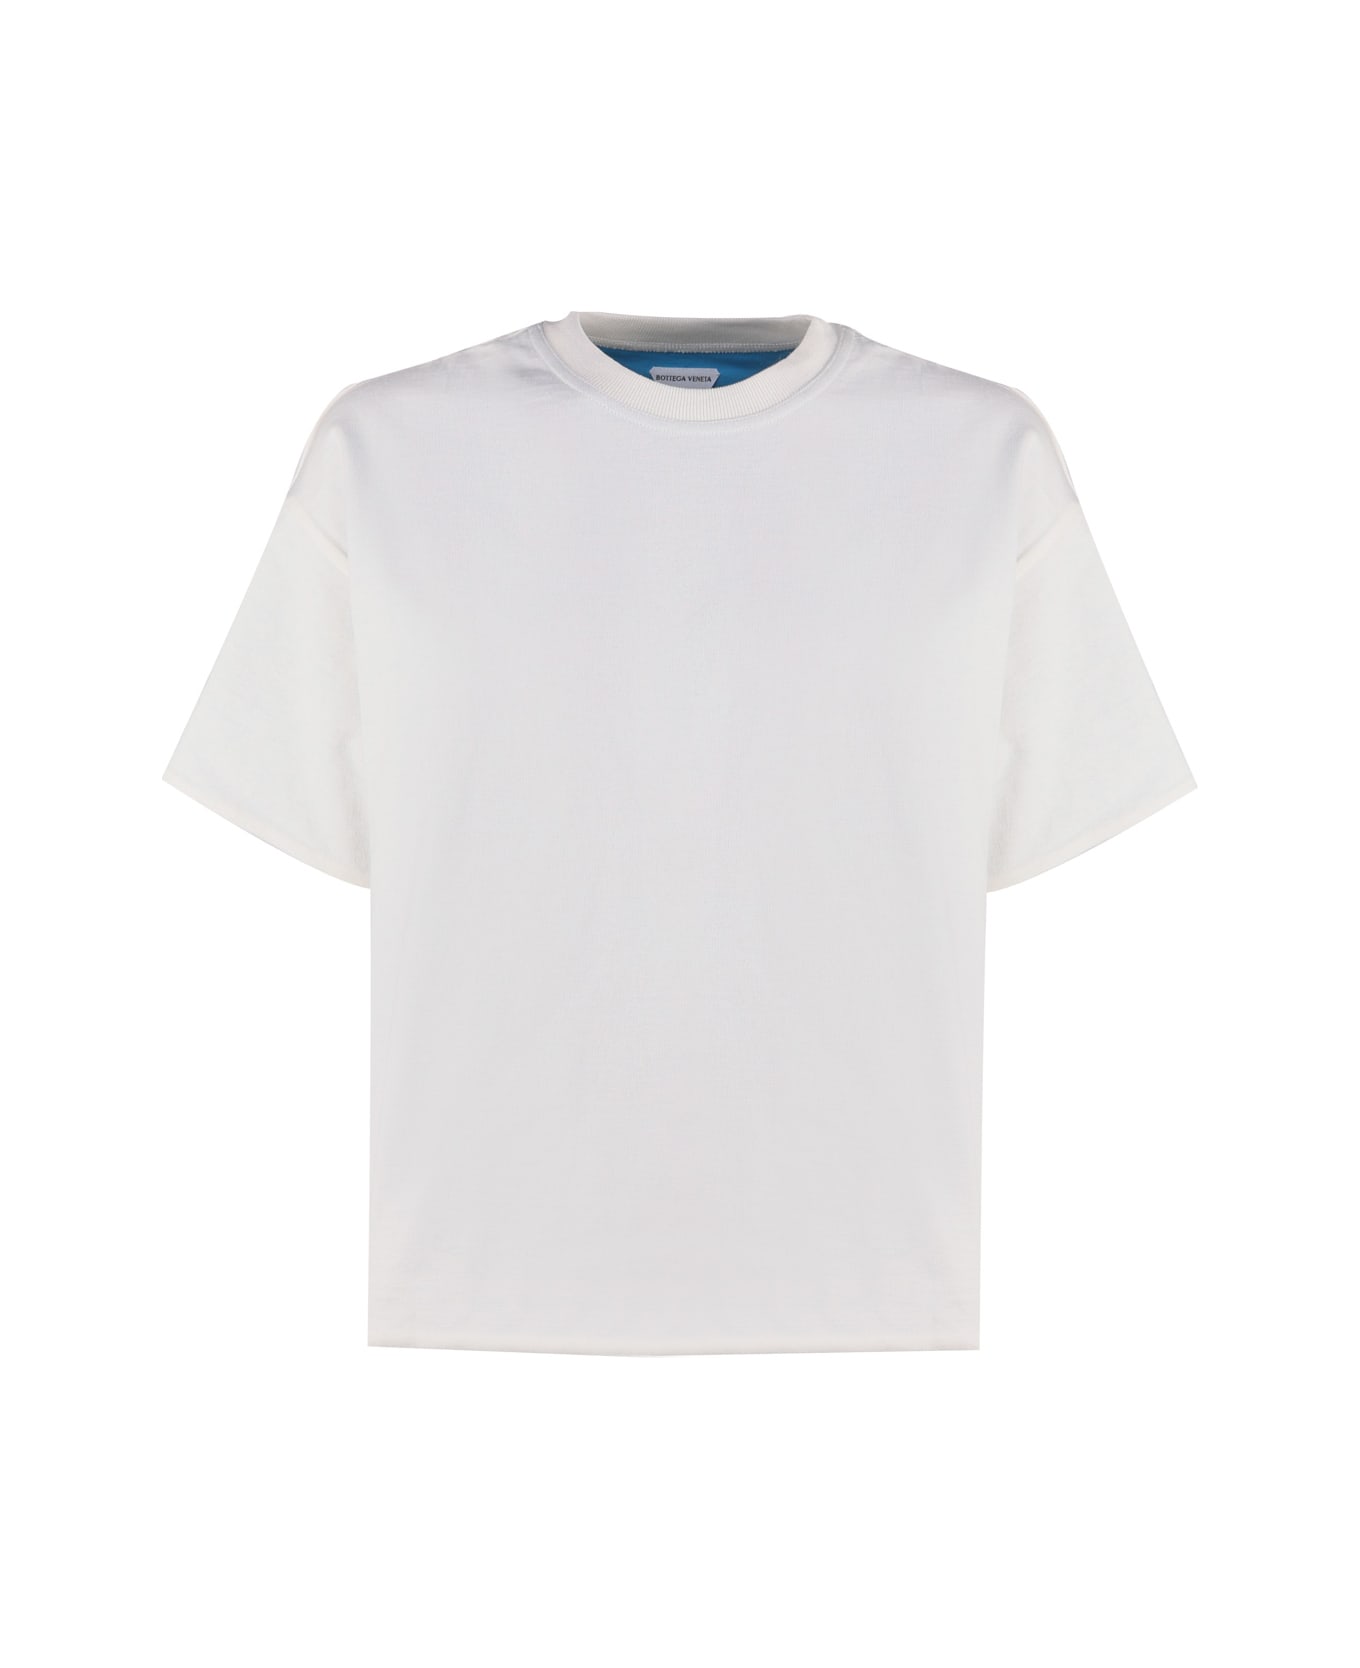 Bottega Veneta Cotton Jersey T-shirt - Chalk/pool